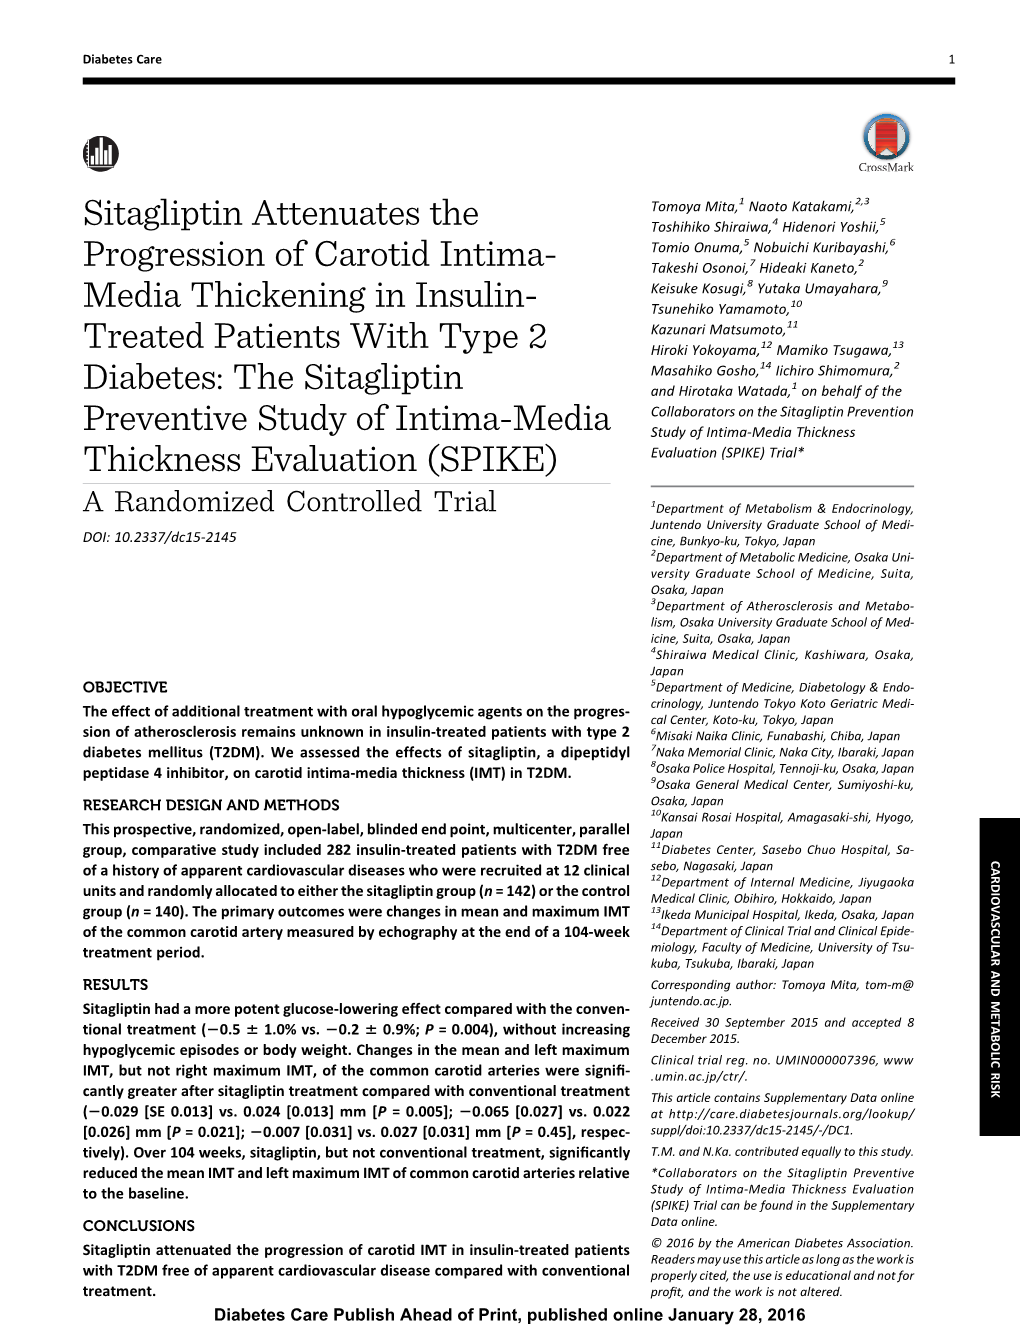 Sitagliptin Attenuates the Progression of Carotid Intima